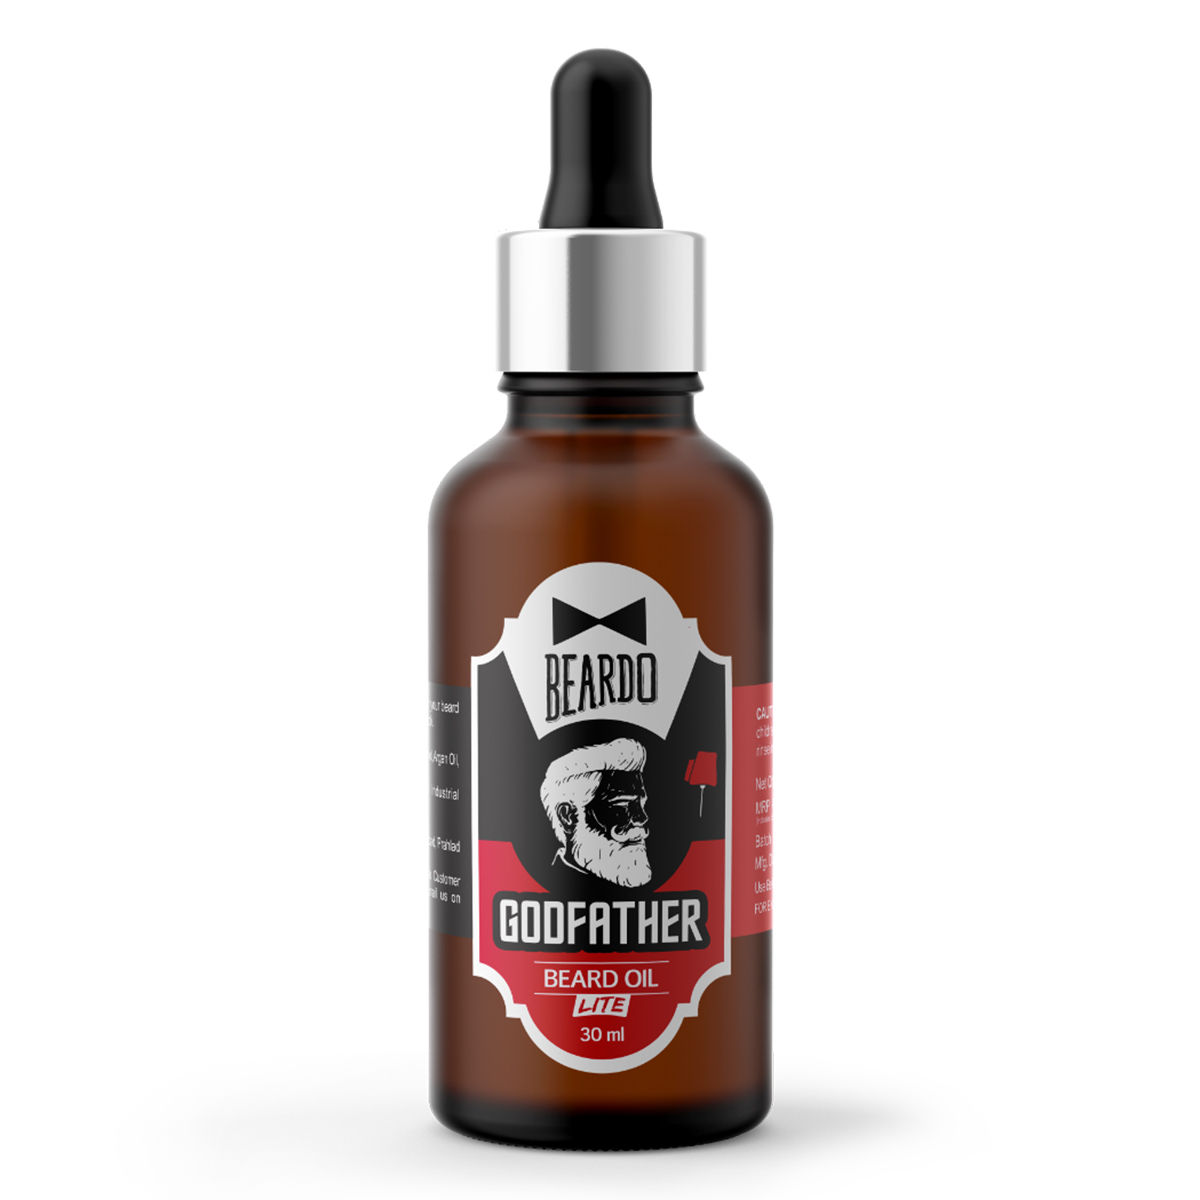 Buy Beardo Godfather Beard Oil Lite, 30 ml Online